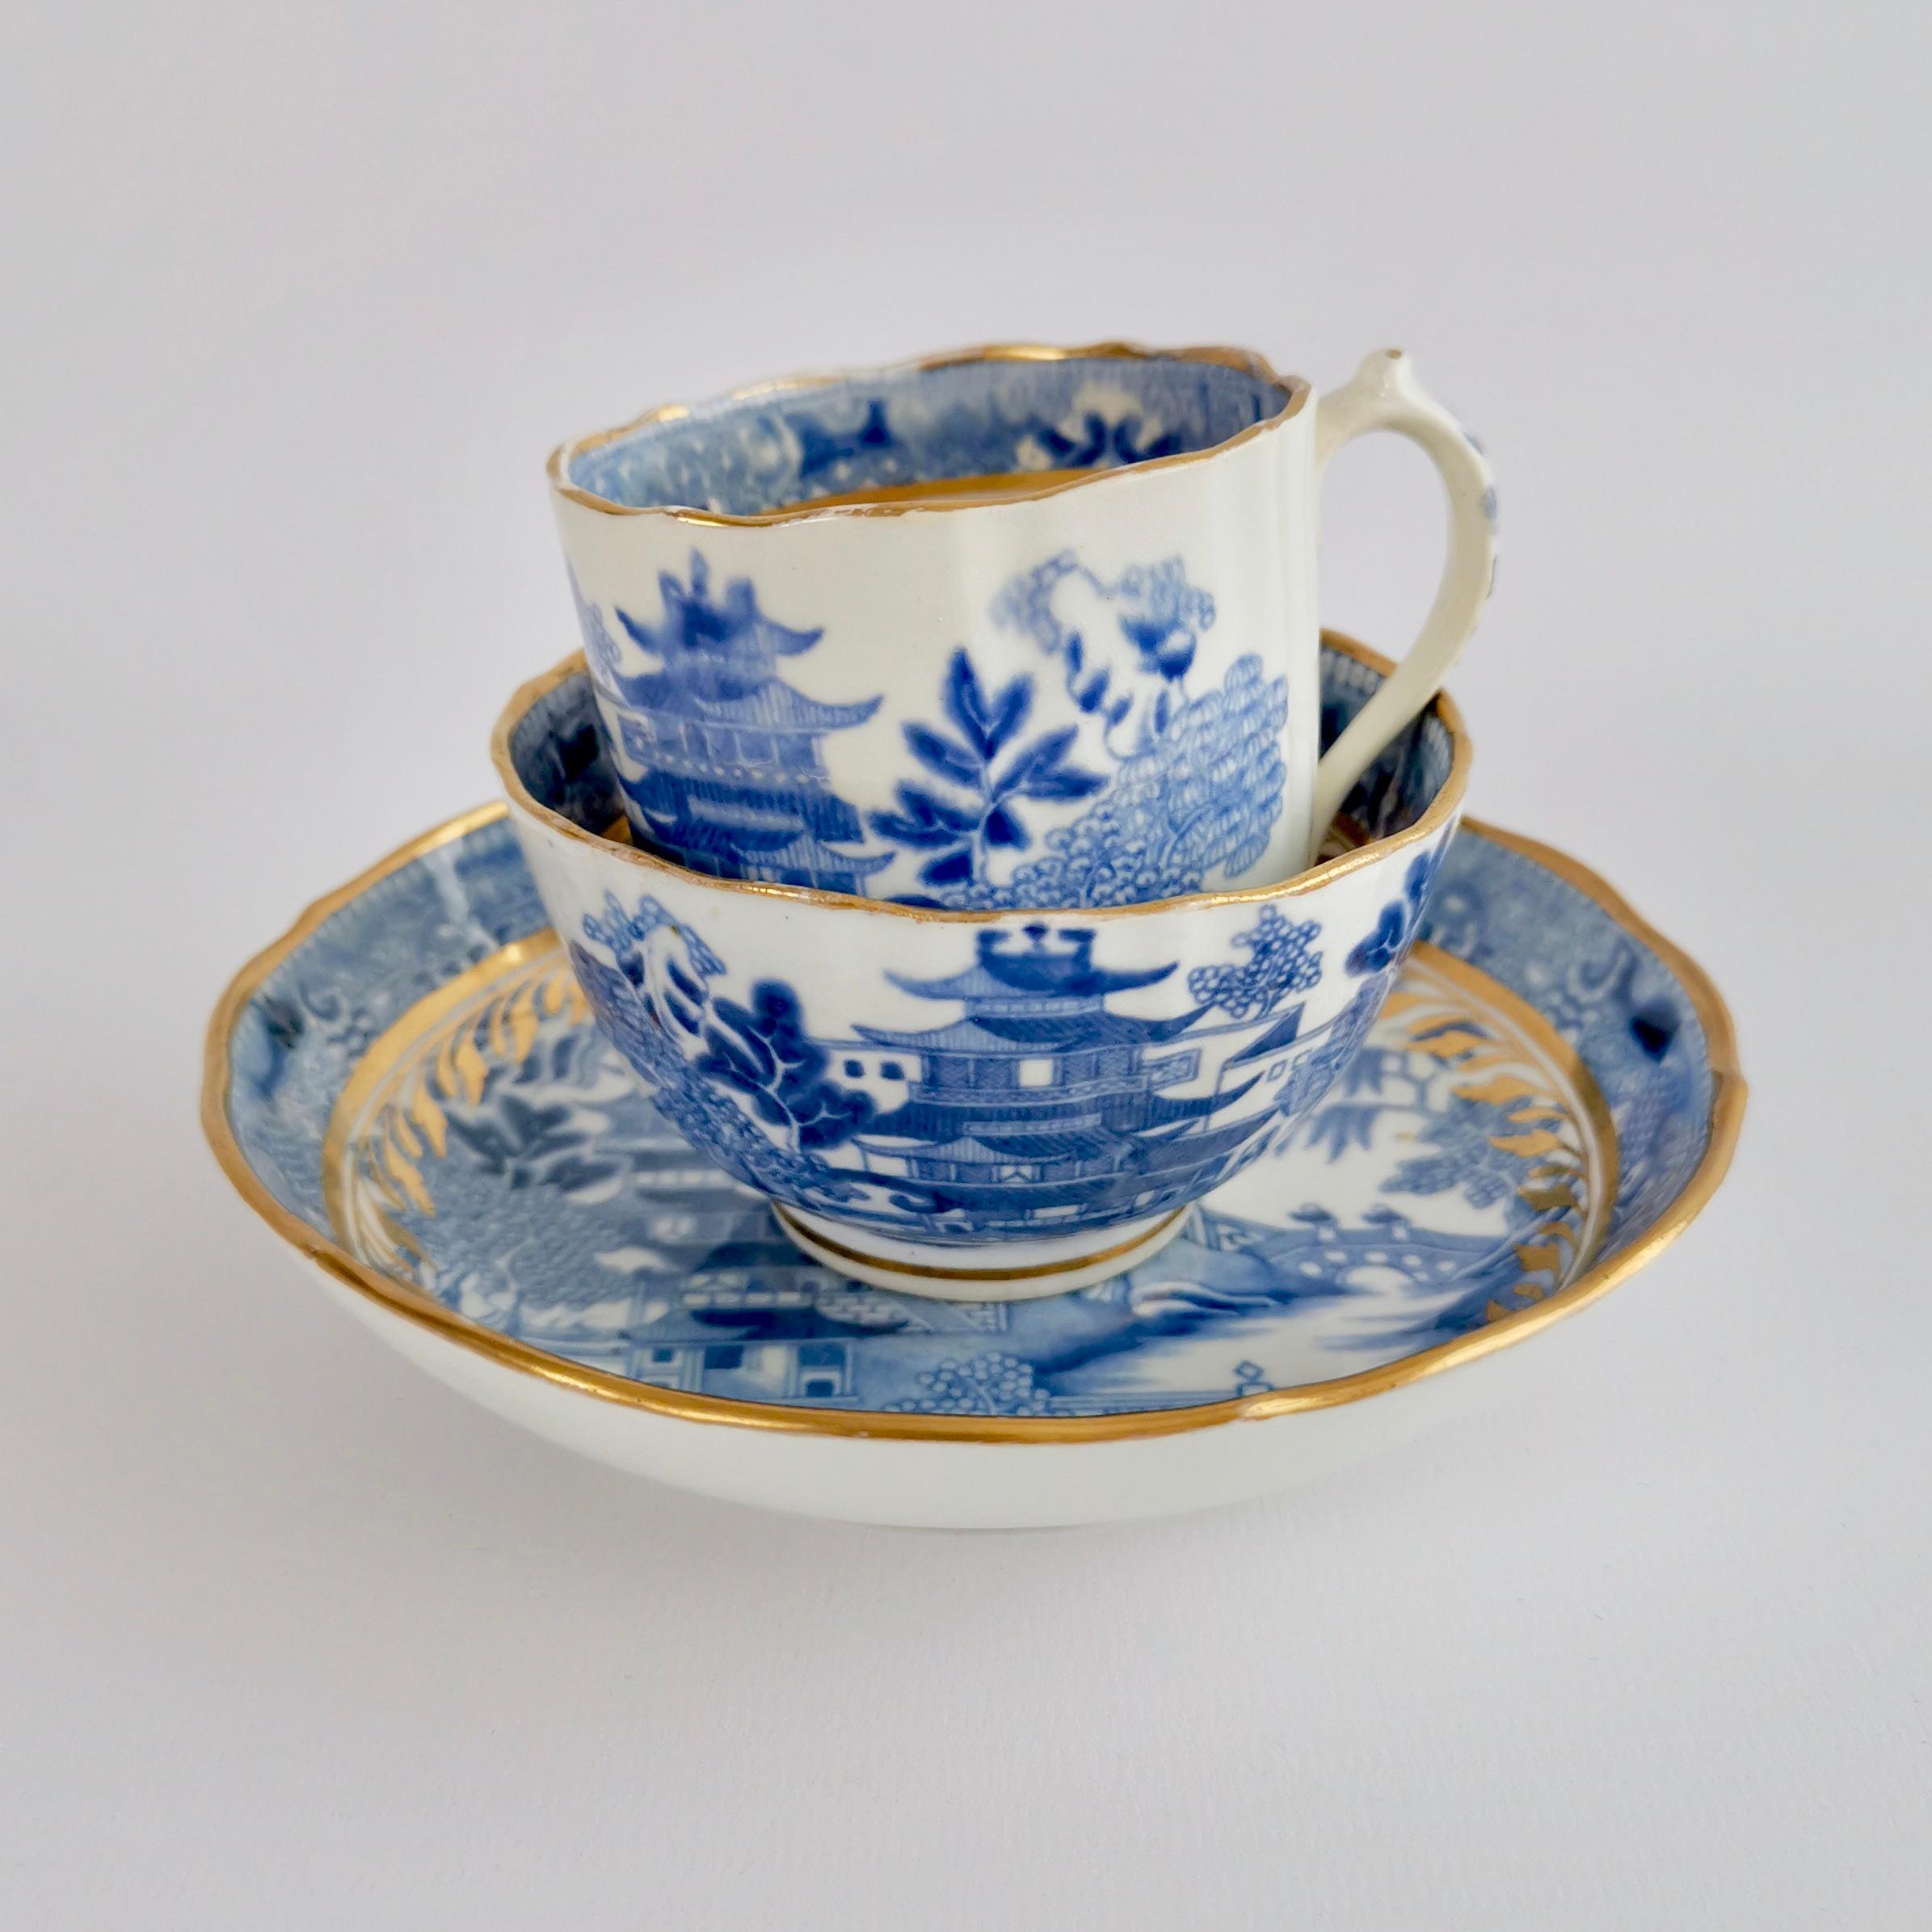 Porcelain Miles Mason Tea Service, Pagoda Pattern Blue and White Transfer, Regency